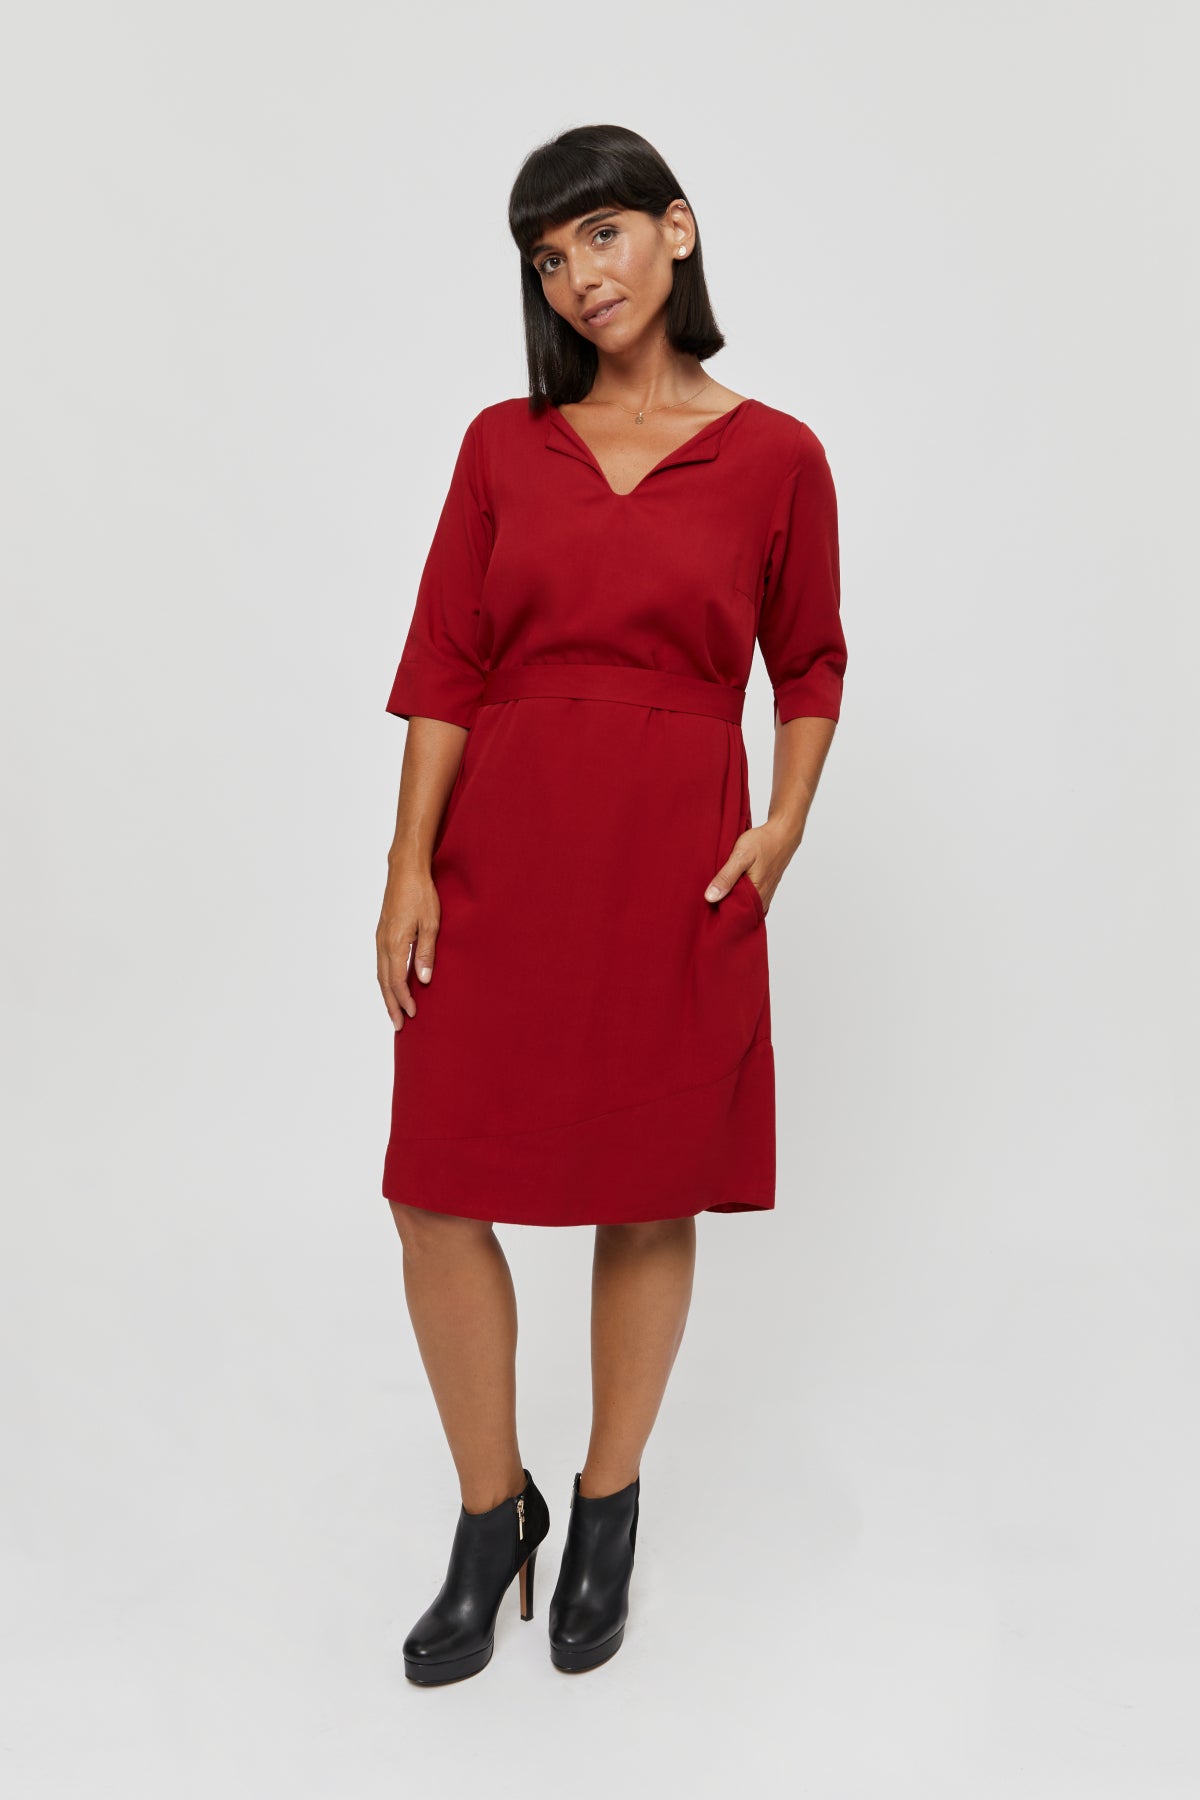 Damen Business Kleid CATHERINE in Rot